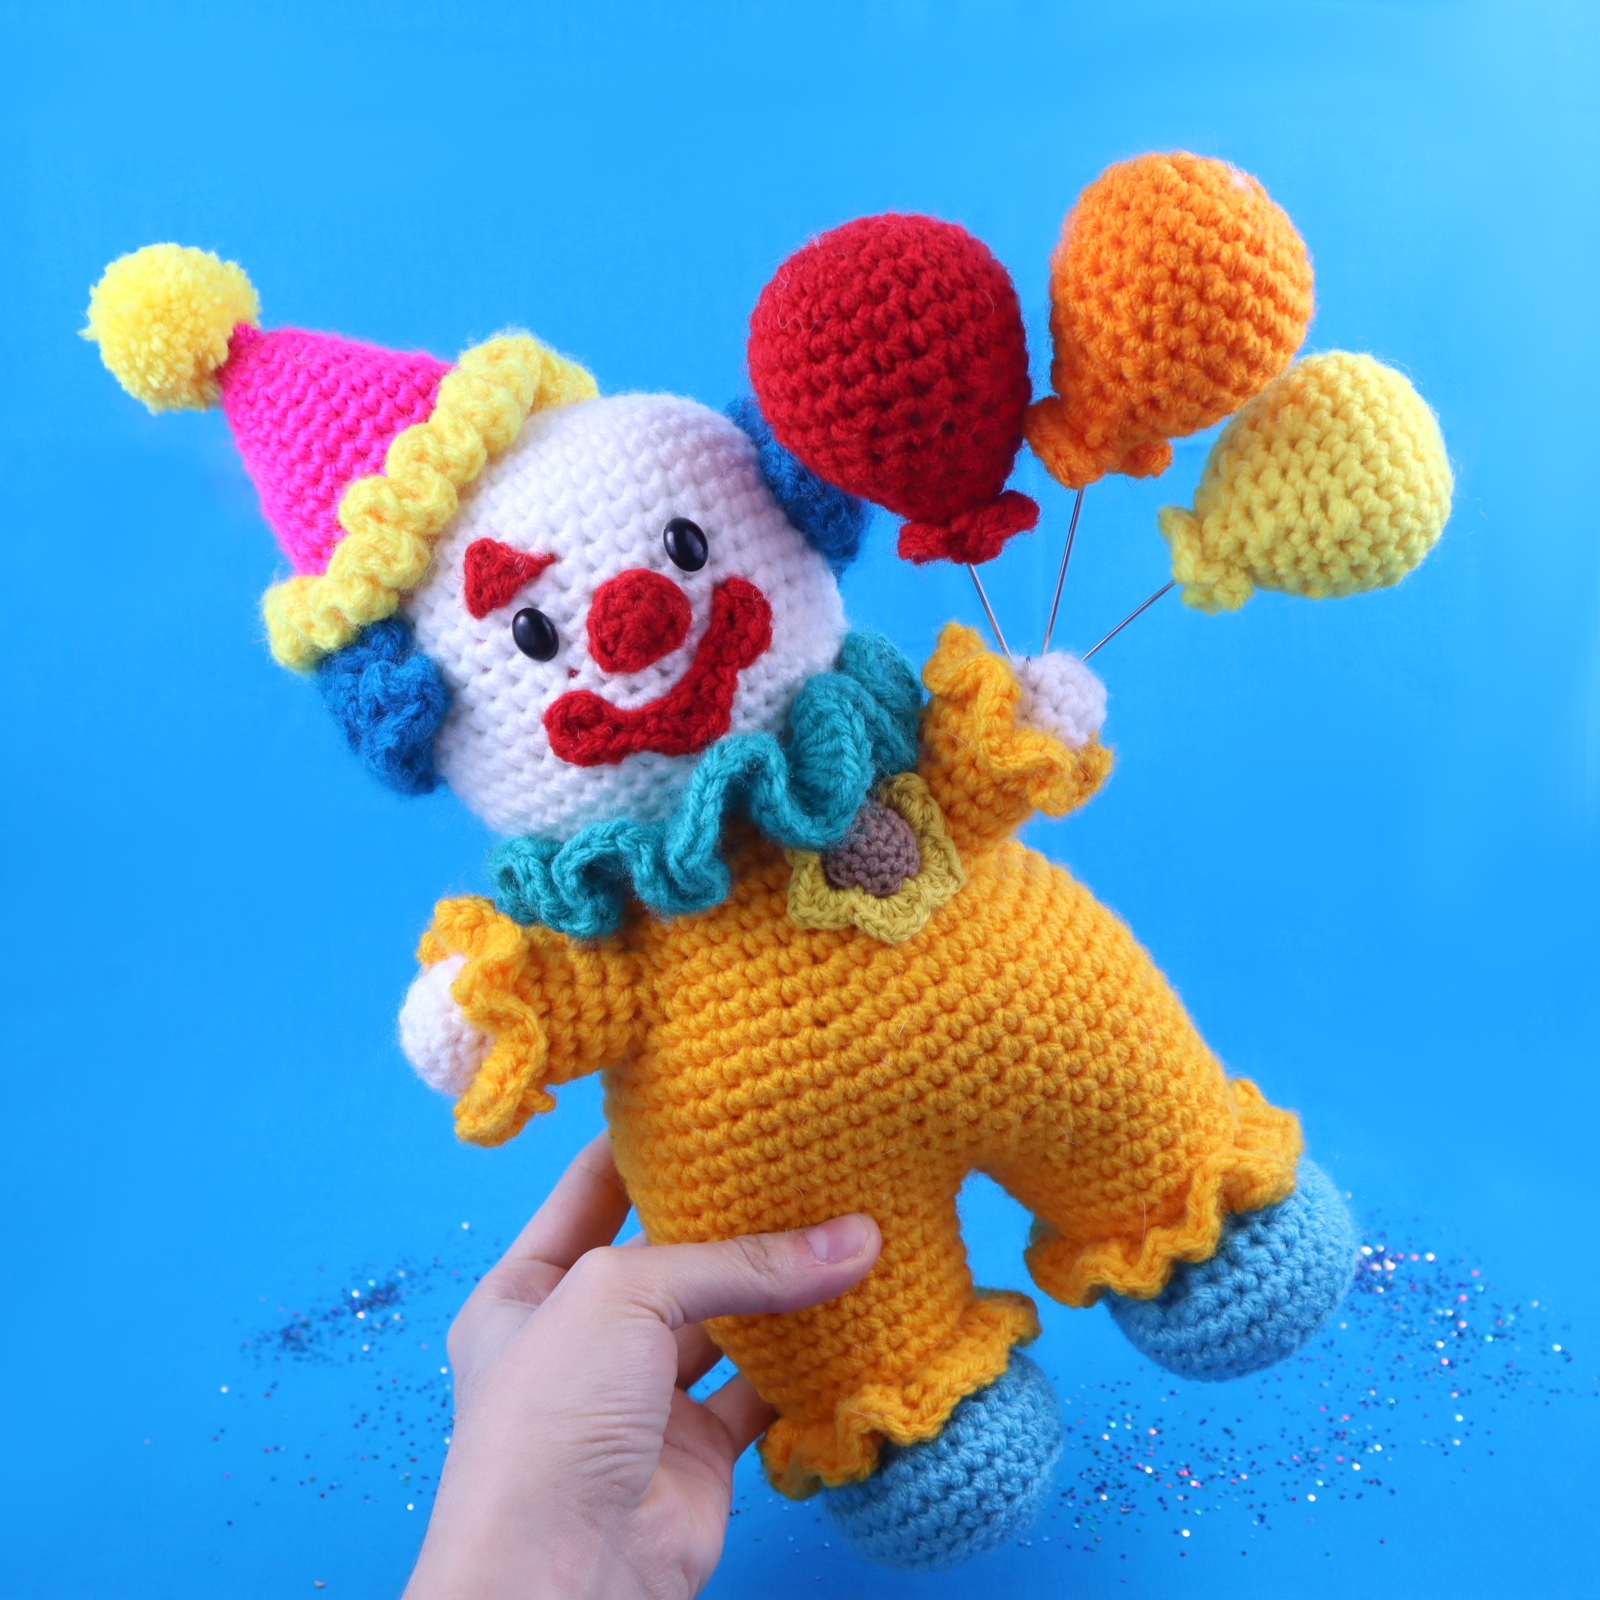 Free Amigurumi Patterns: Dolls & Animal Crochet Patterns - JOANN